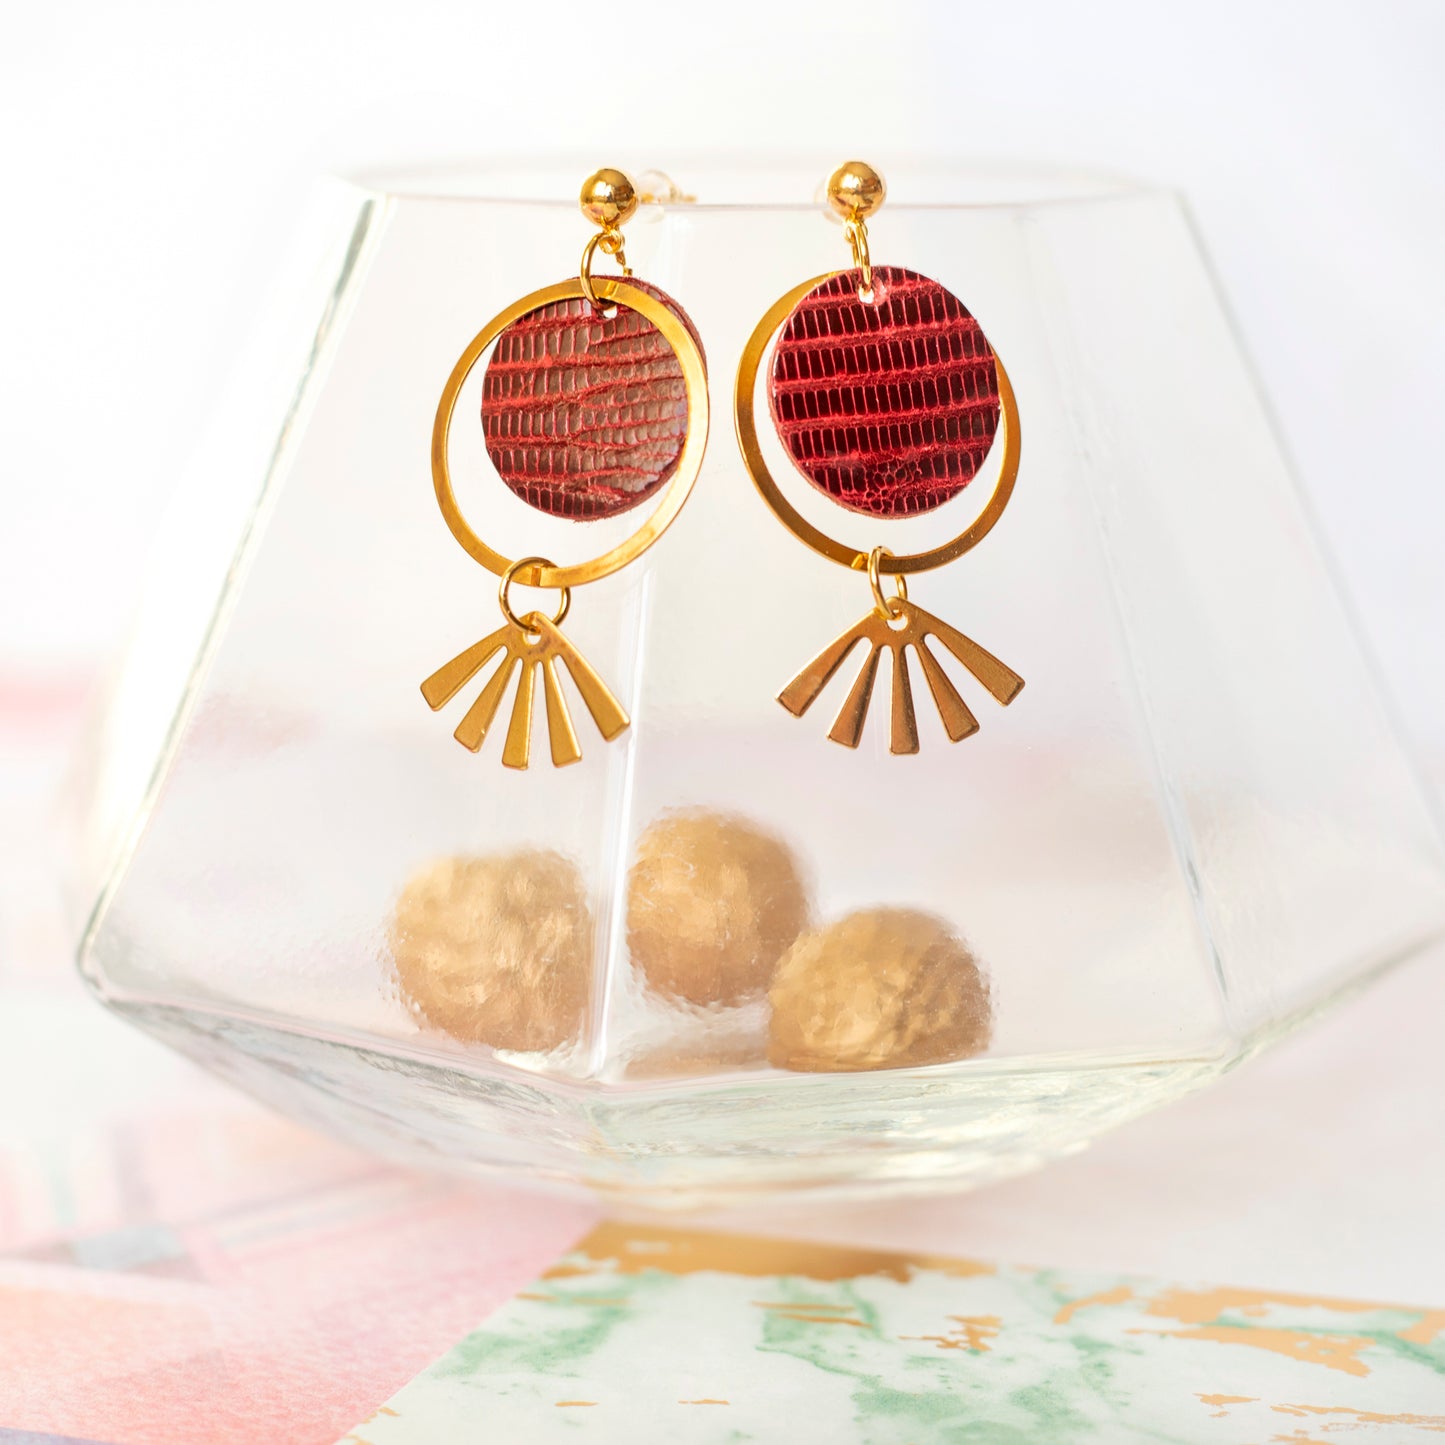 Kléo earrings in burgundy red leather